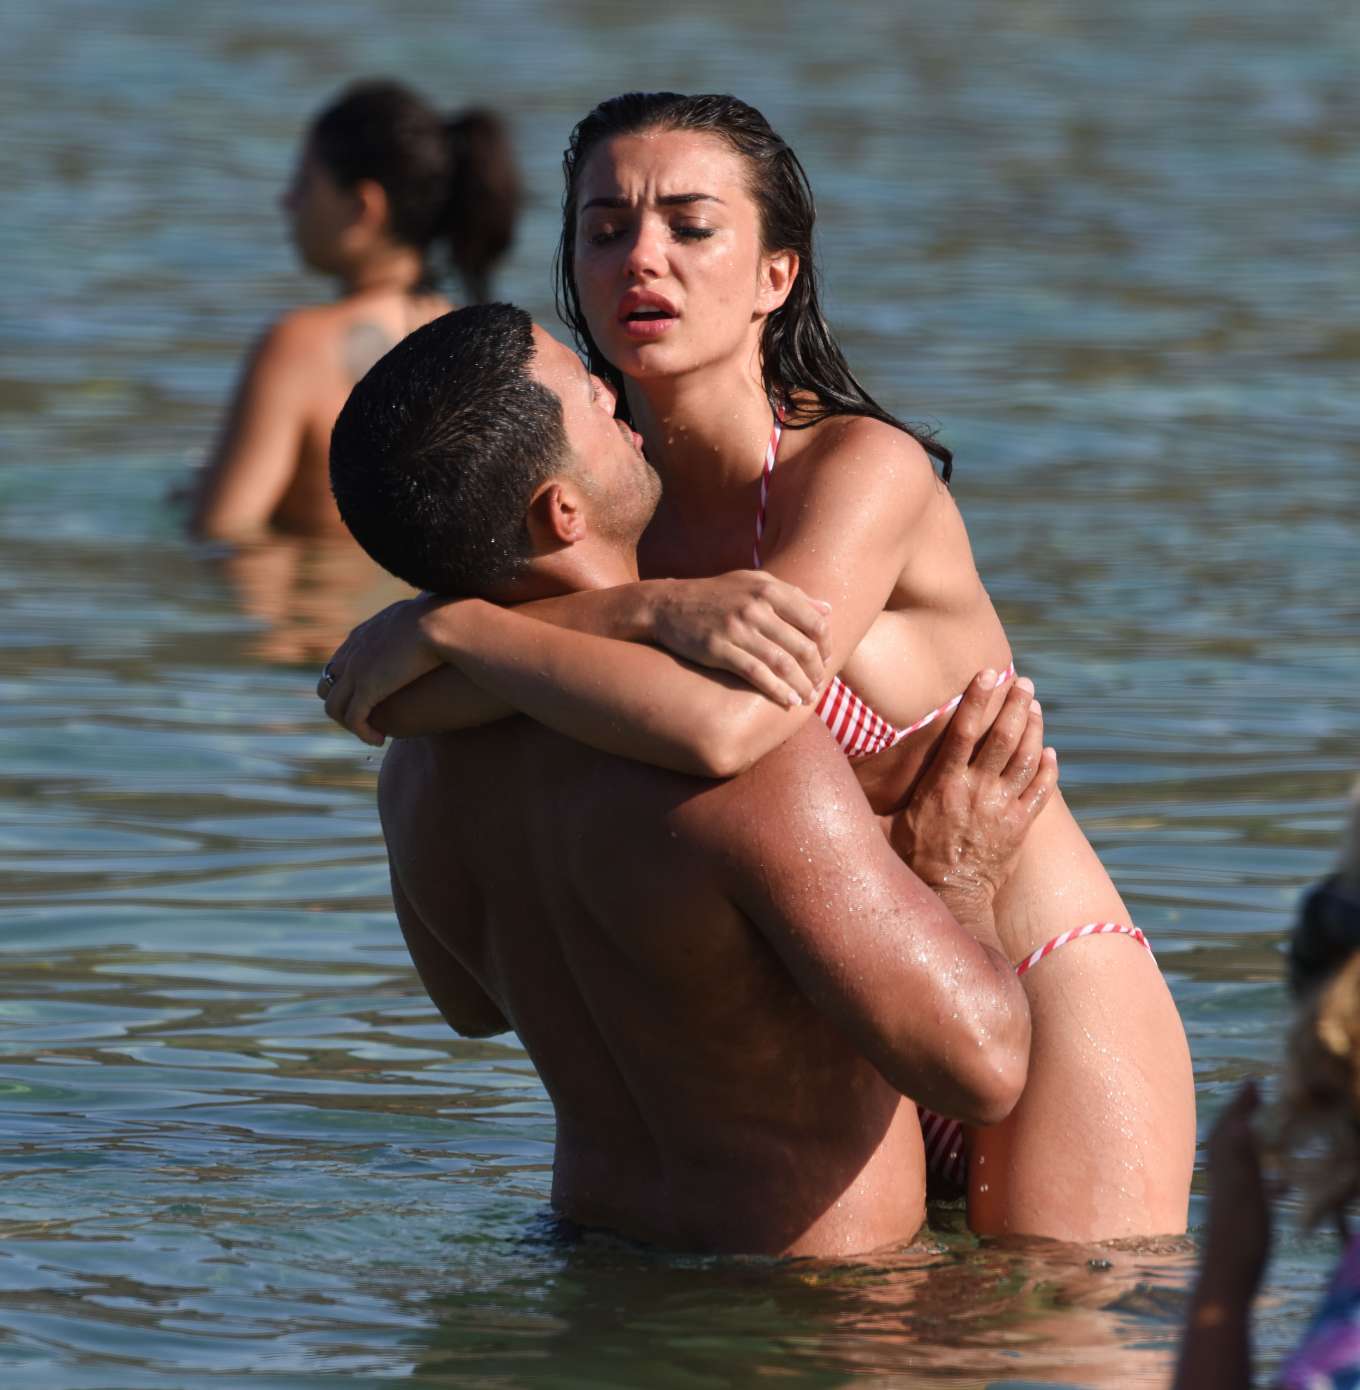 Kimberley Garner and Amy Jackson â€“ Bikini candids at a beach in Mykonos